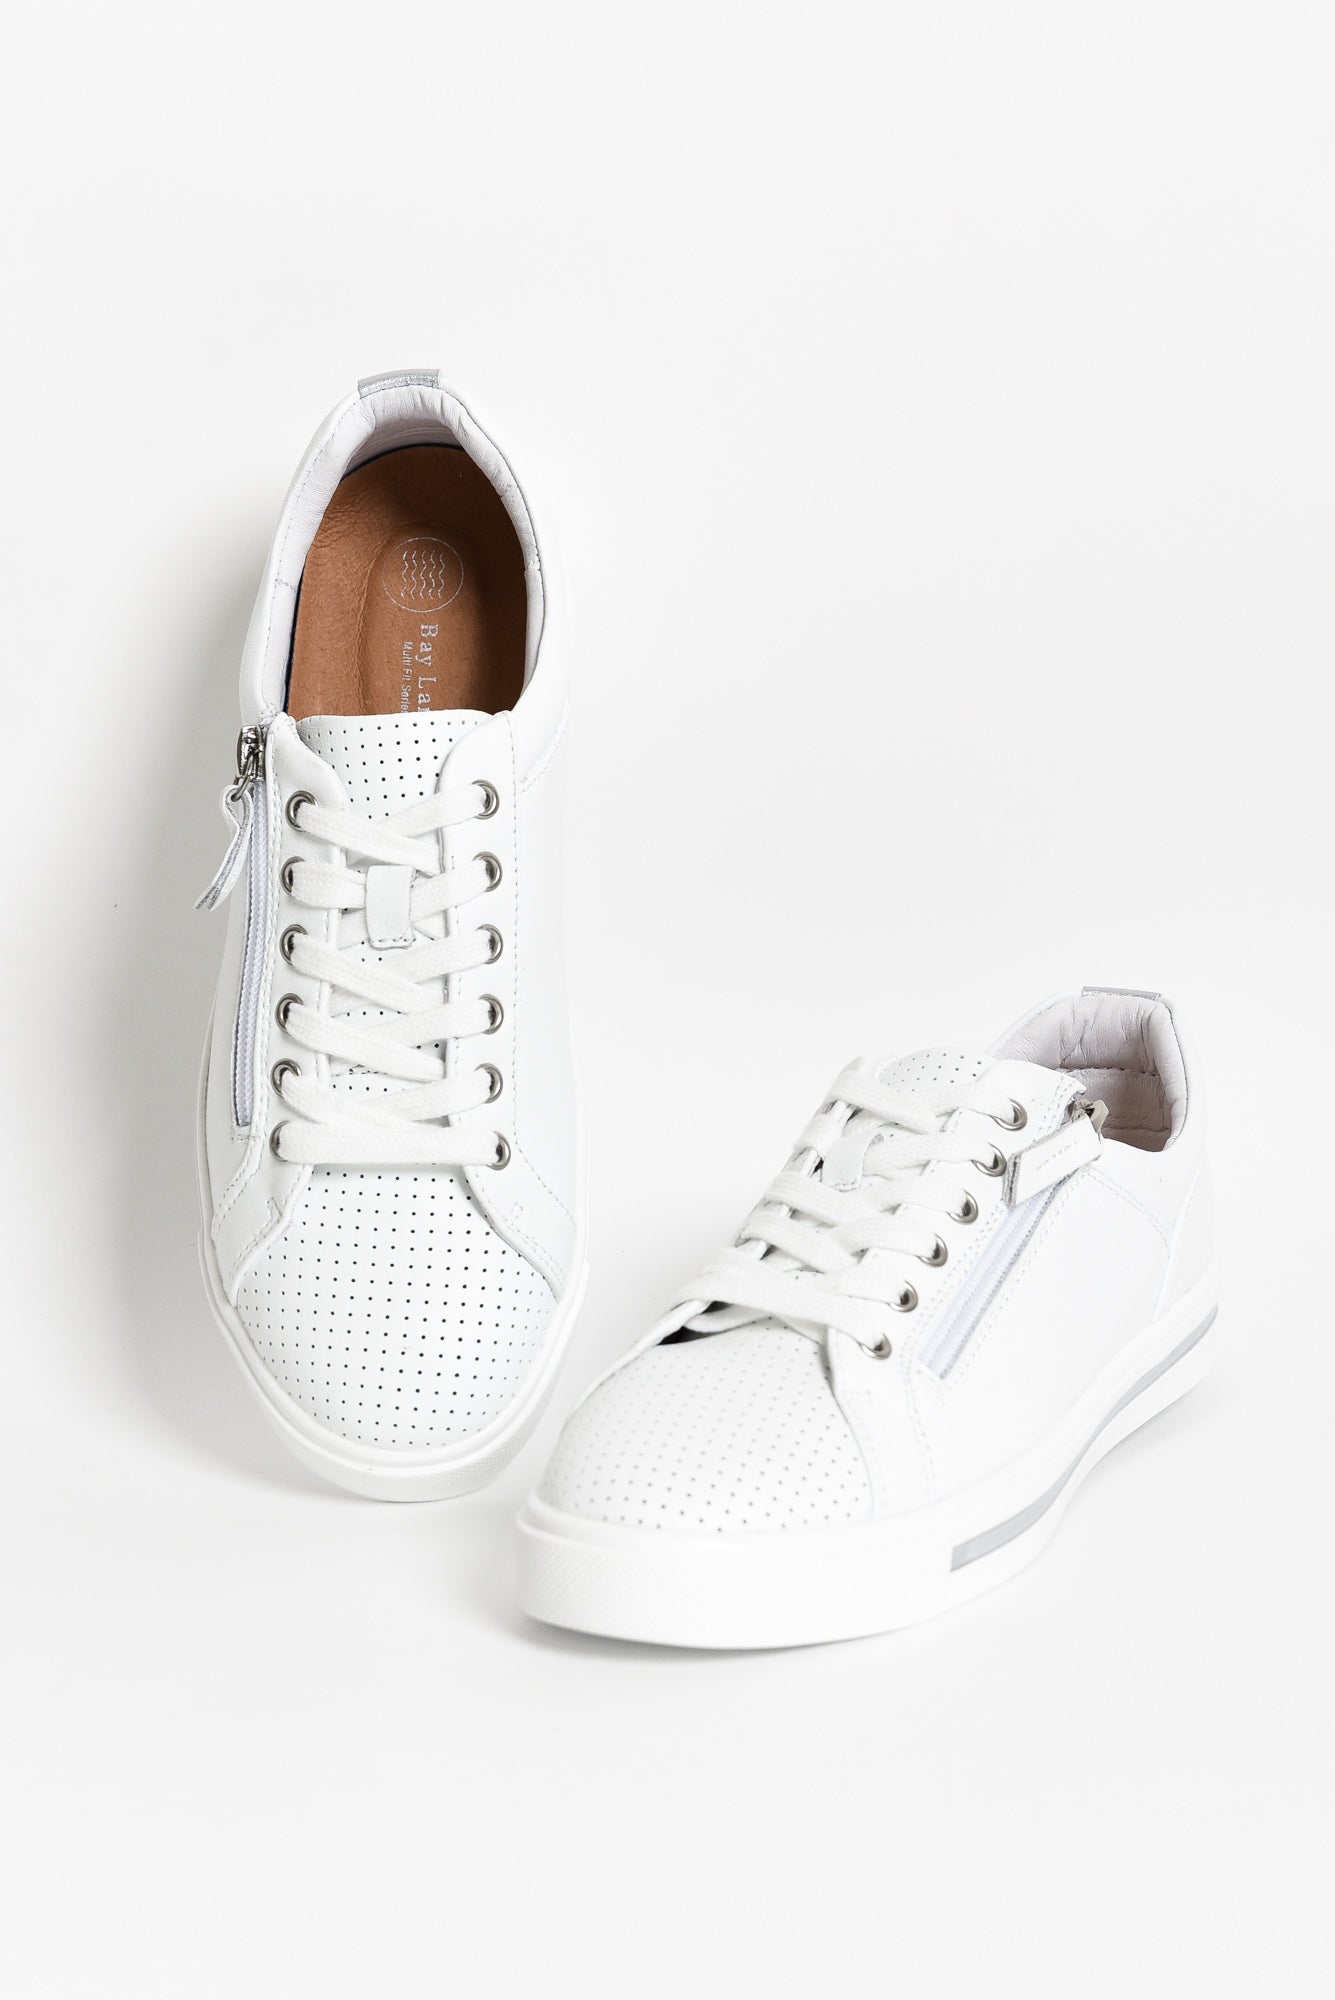 12 best white sneakers for women